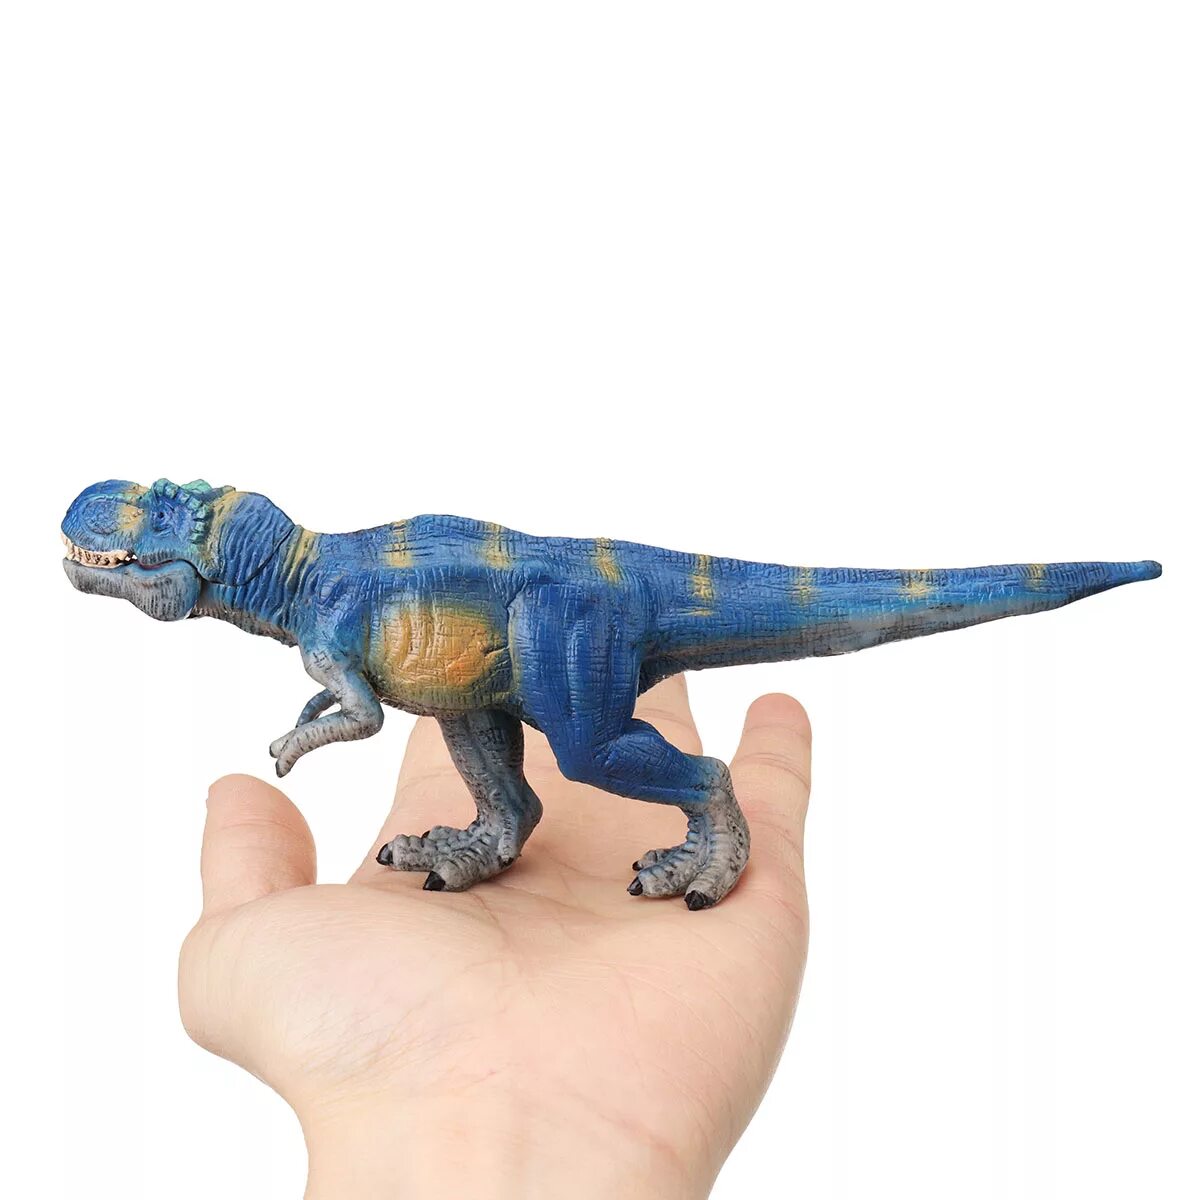 Игрушки динозавры Тираннозавр рекс. Скорпиос рекс игрушка. Jurassic World Скорпиос рекс фигурка. Синий Тиранозавр.